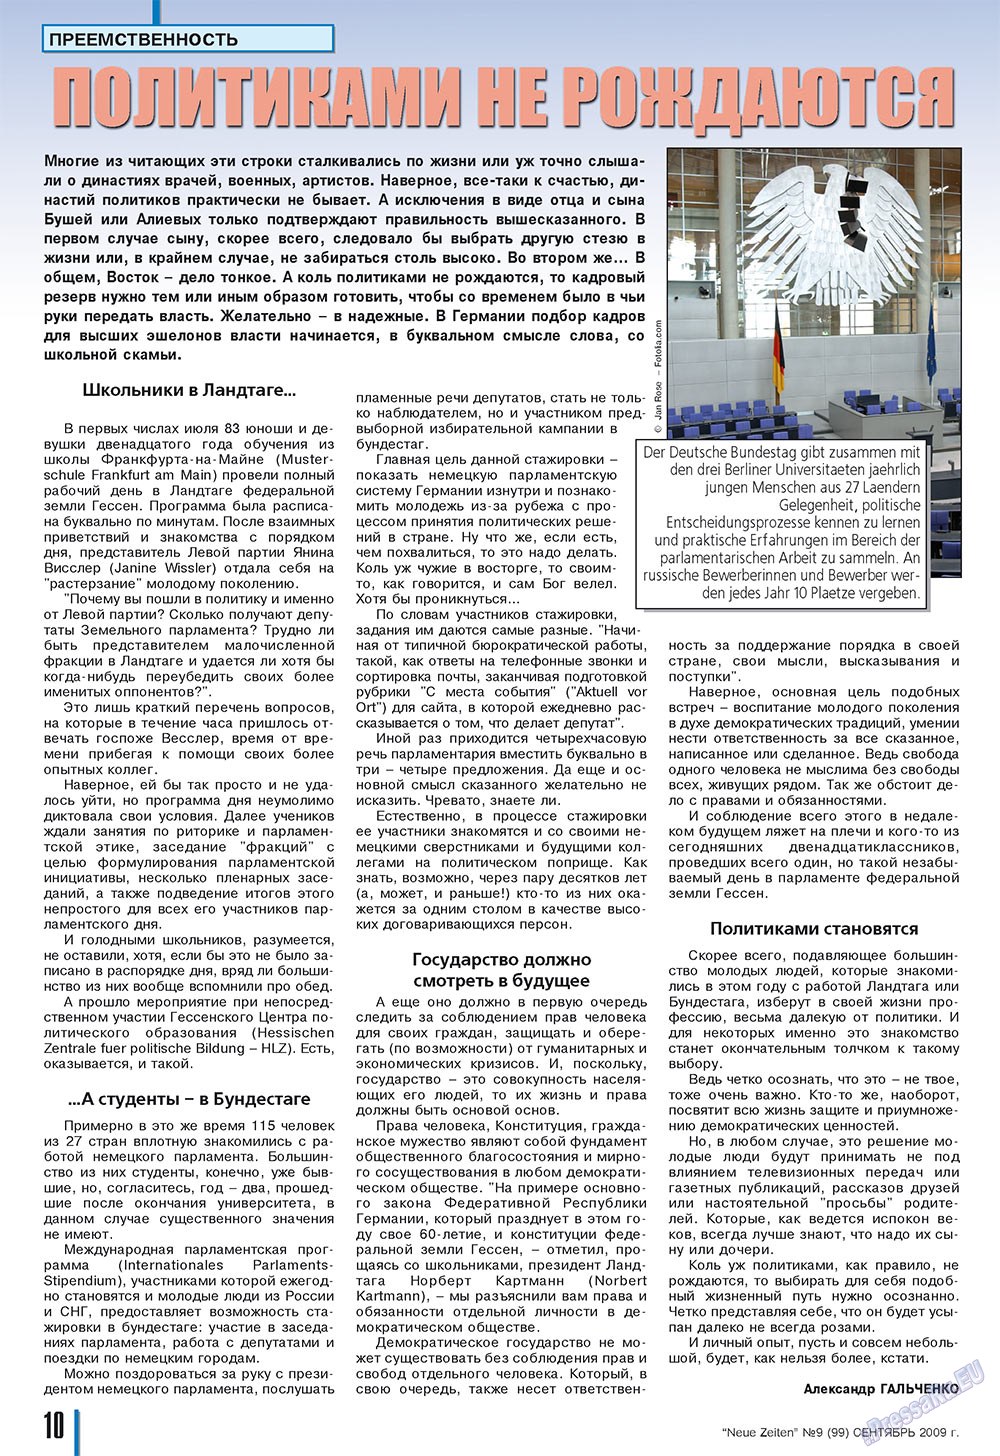 Neue Zeiten (журнал). 2009 год, номер 9, стр. 10